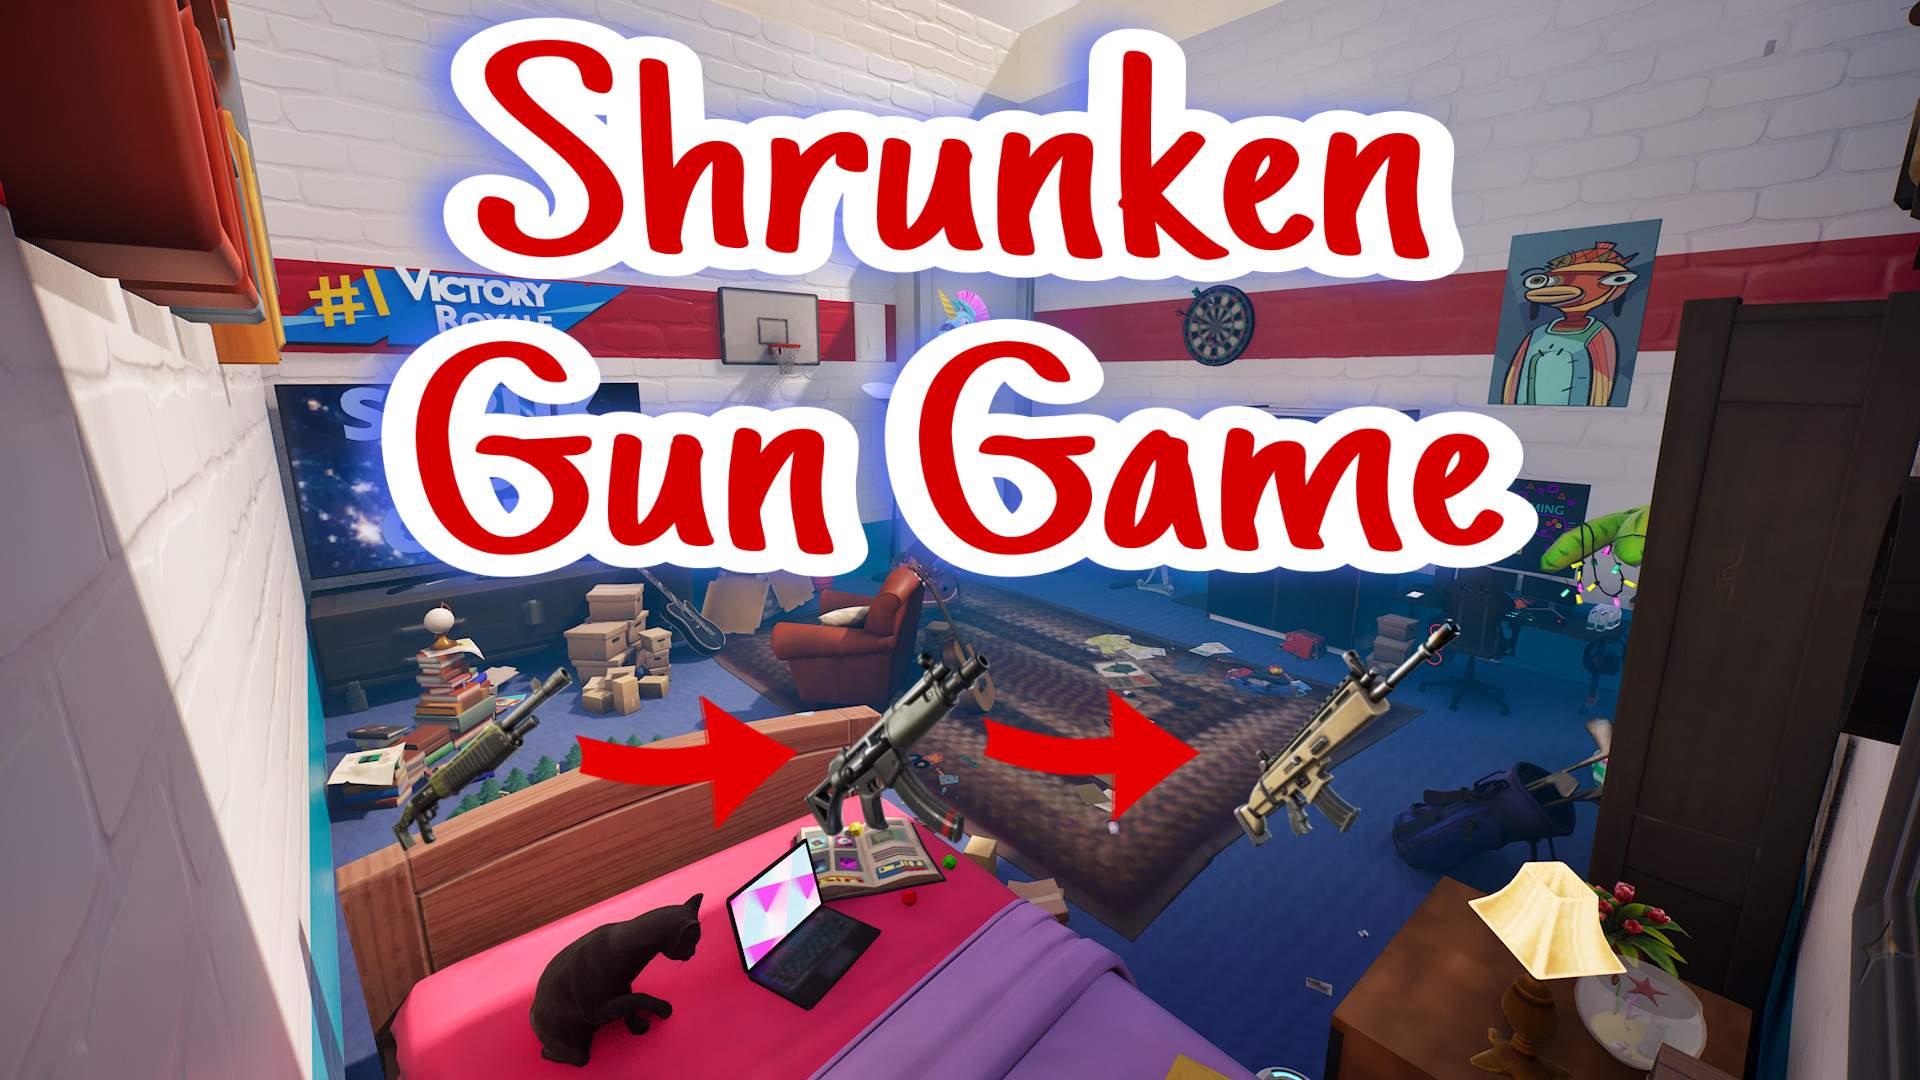 Shrunken Gun Game